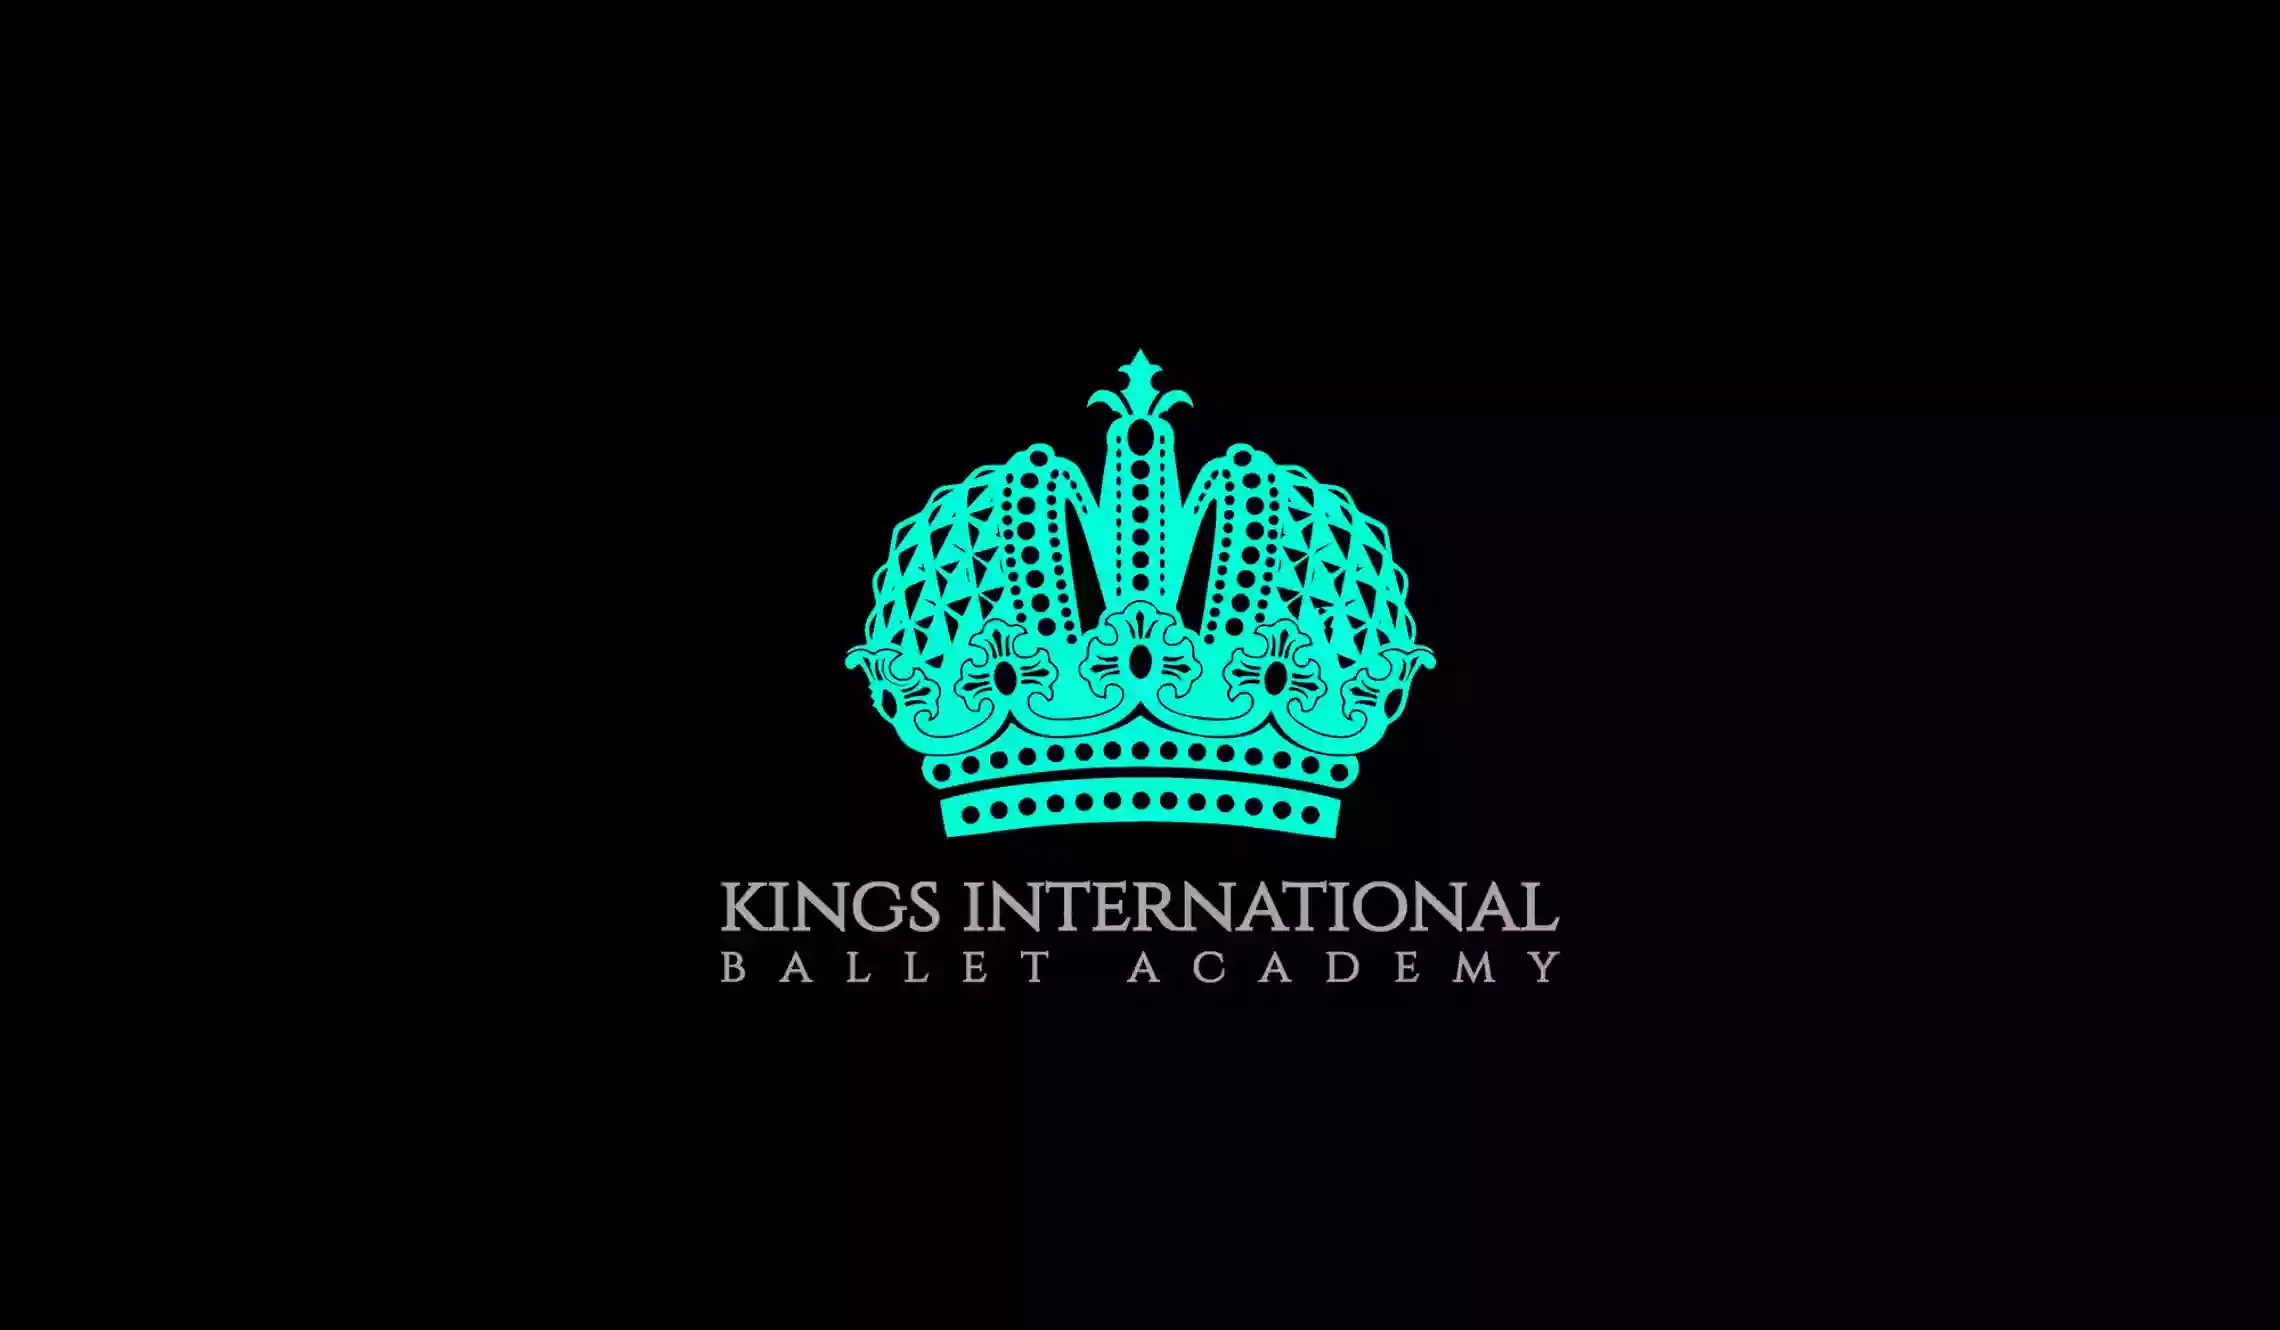 Kings International Ballet Academy